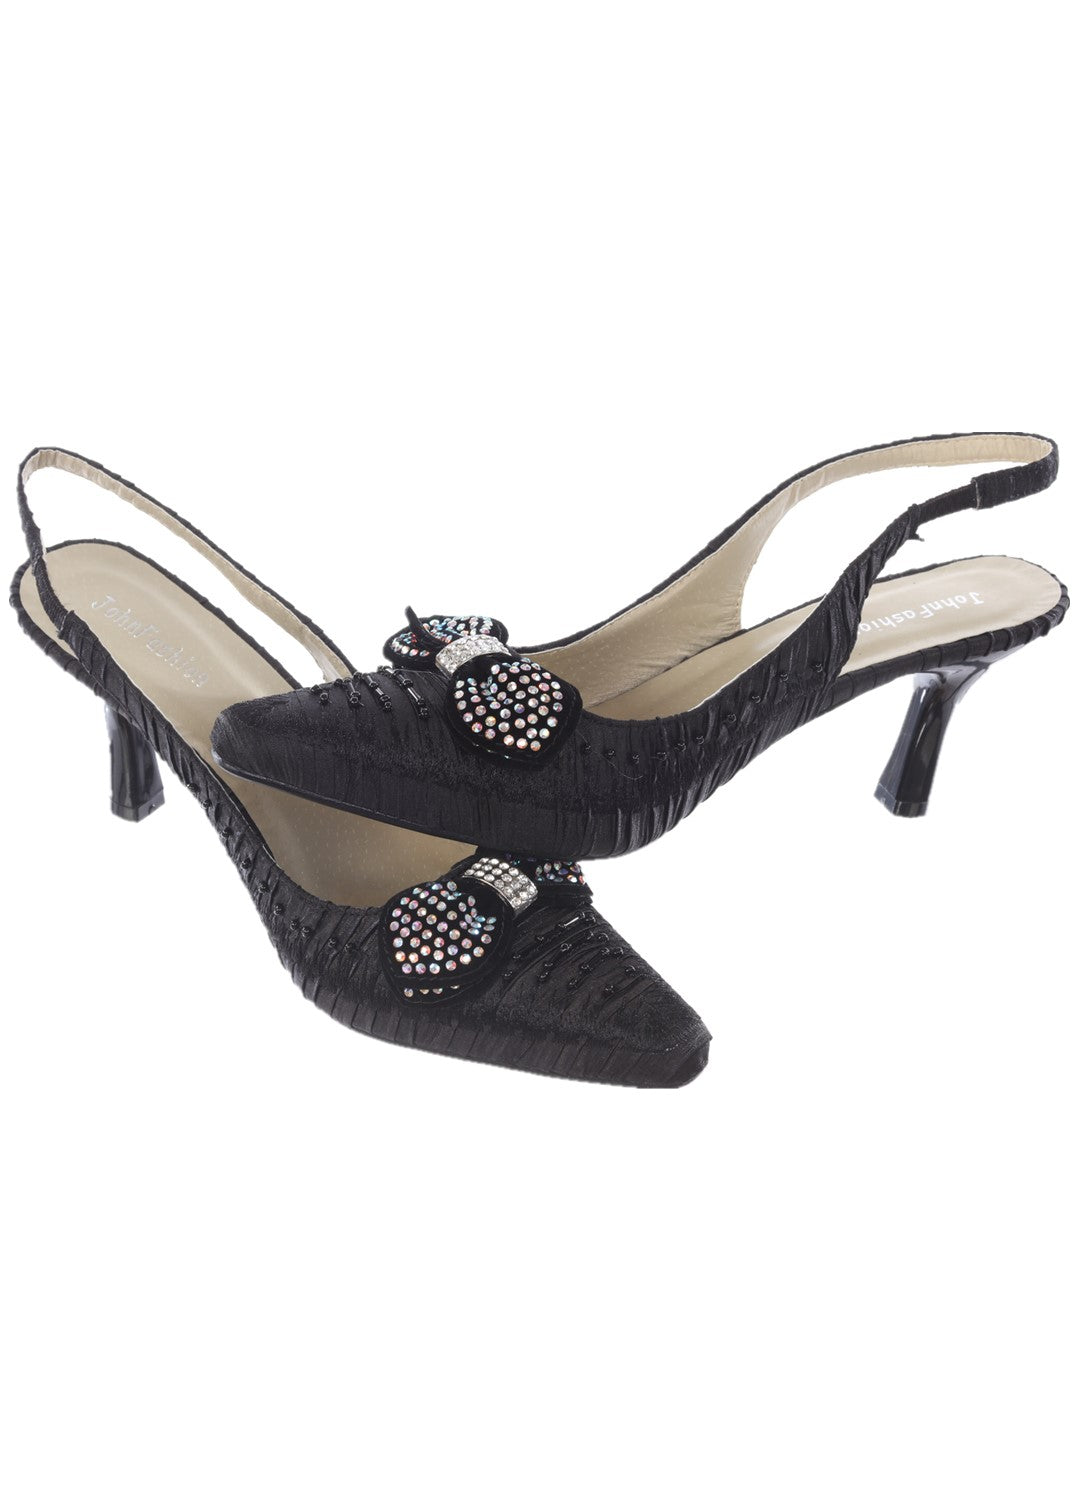 Buy SIGNATURE SOLE Black Peep-Toe Heels at Amazon.in